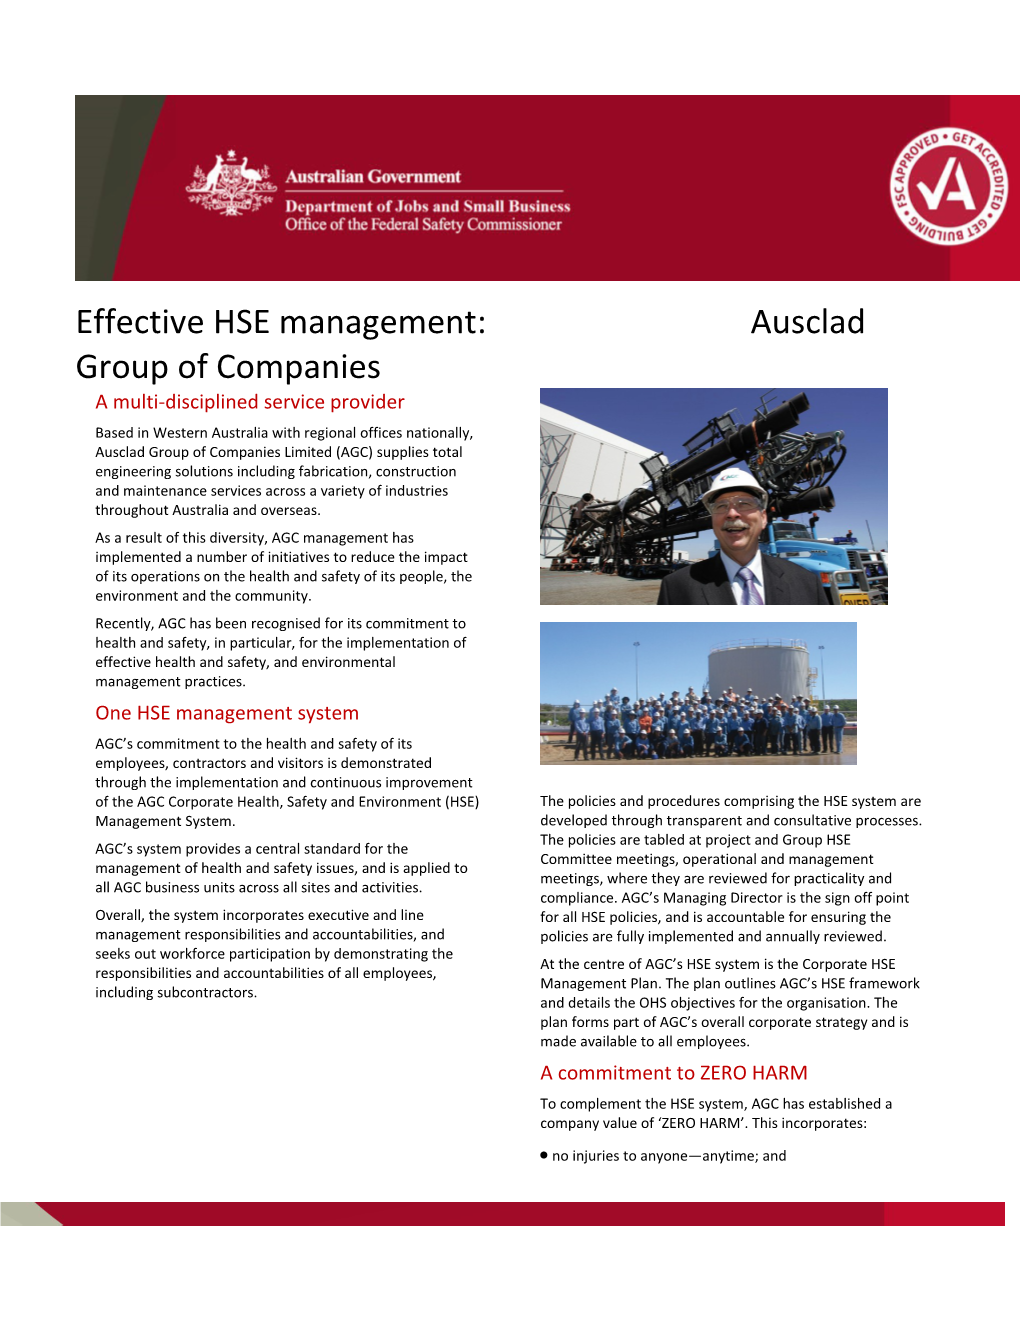 Effective HSE Management: Ausclad Group of Companies